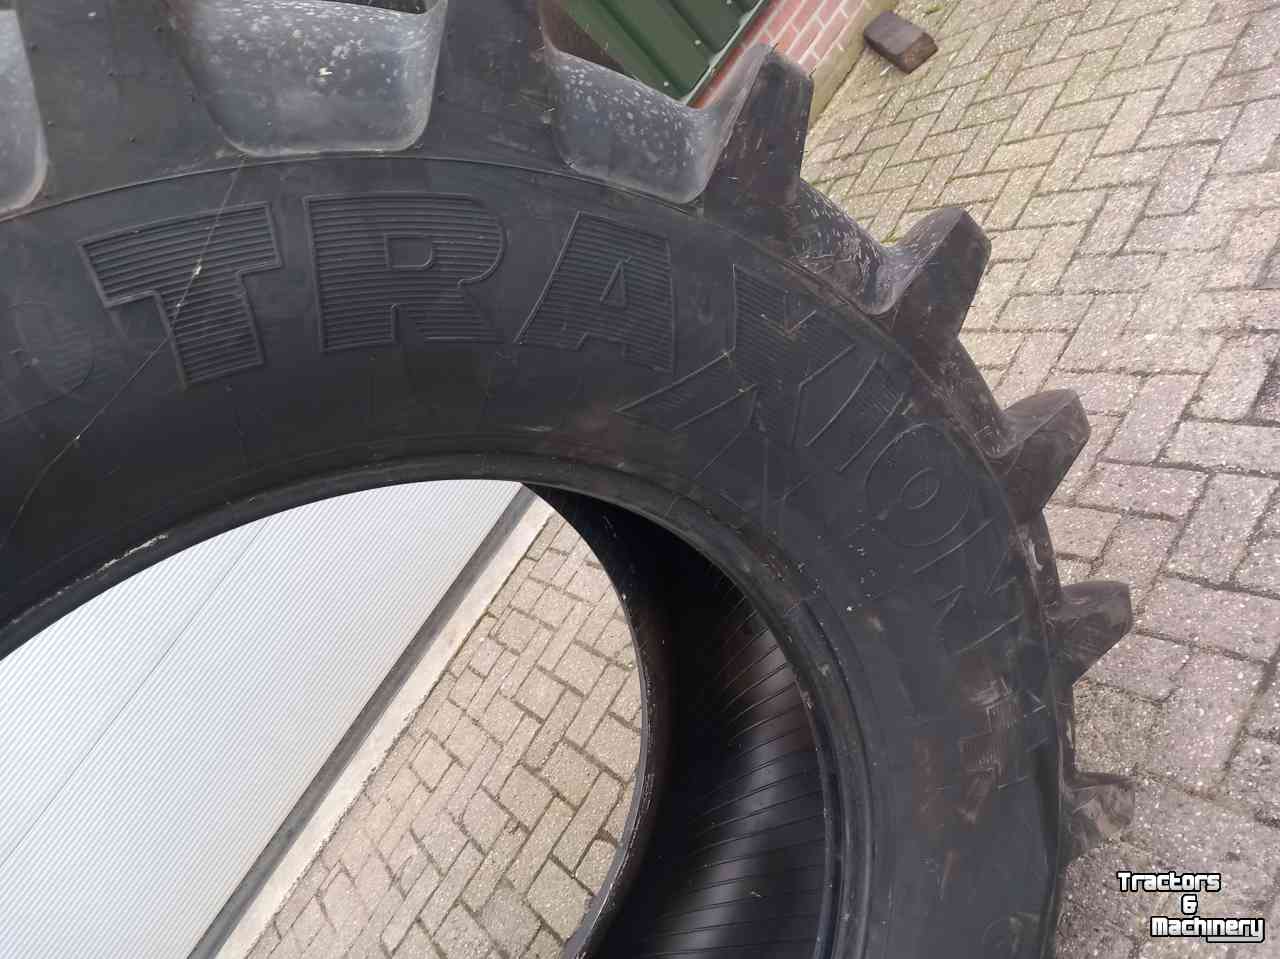 Wheels, Tyres, Rims & Dual spacers Vredestein 650/65/38 Traxxion+